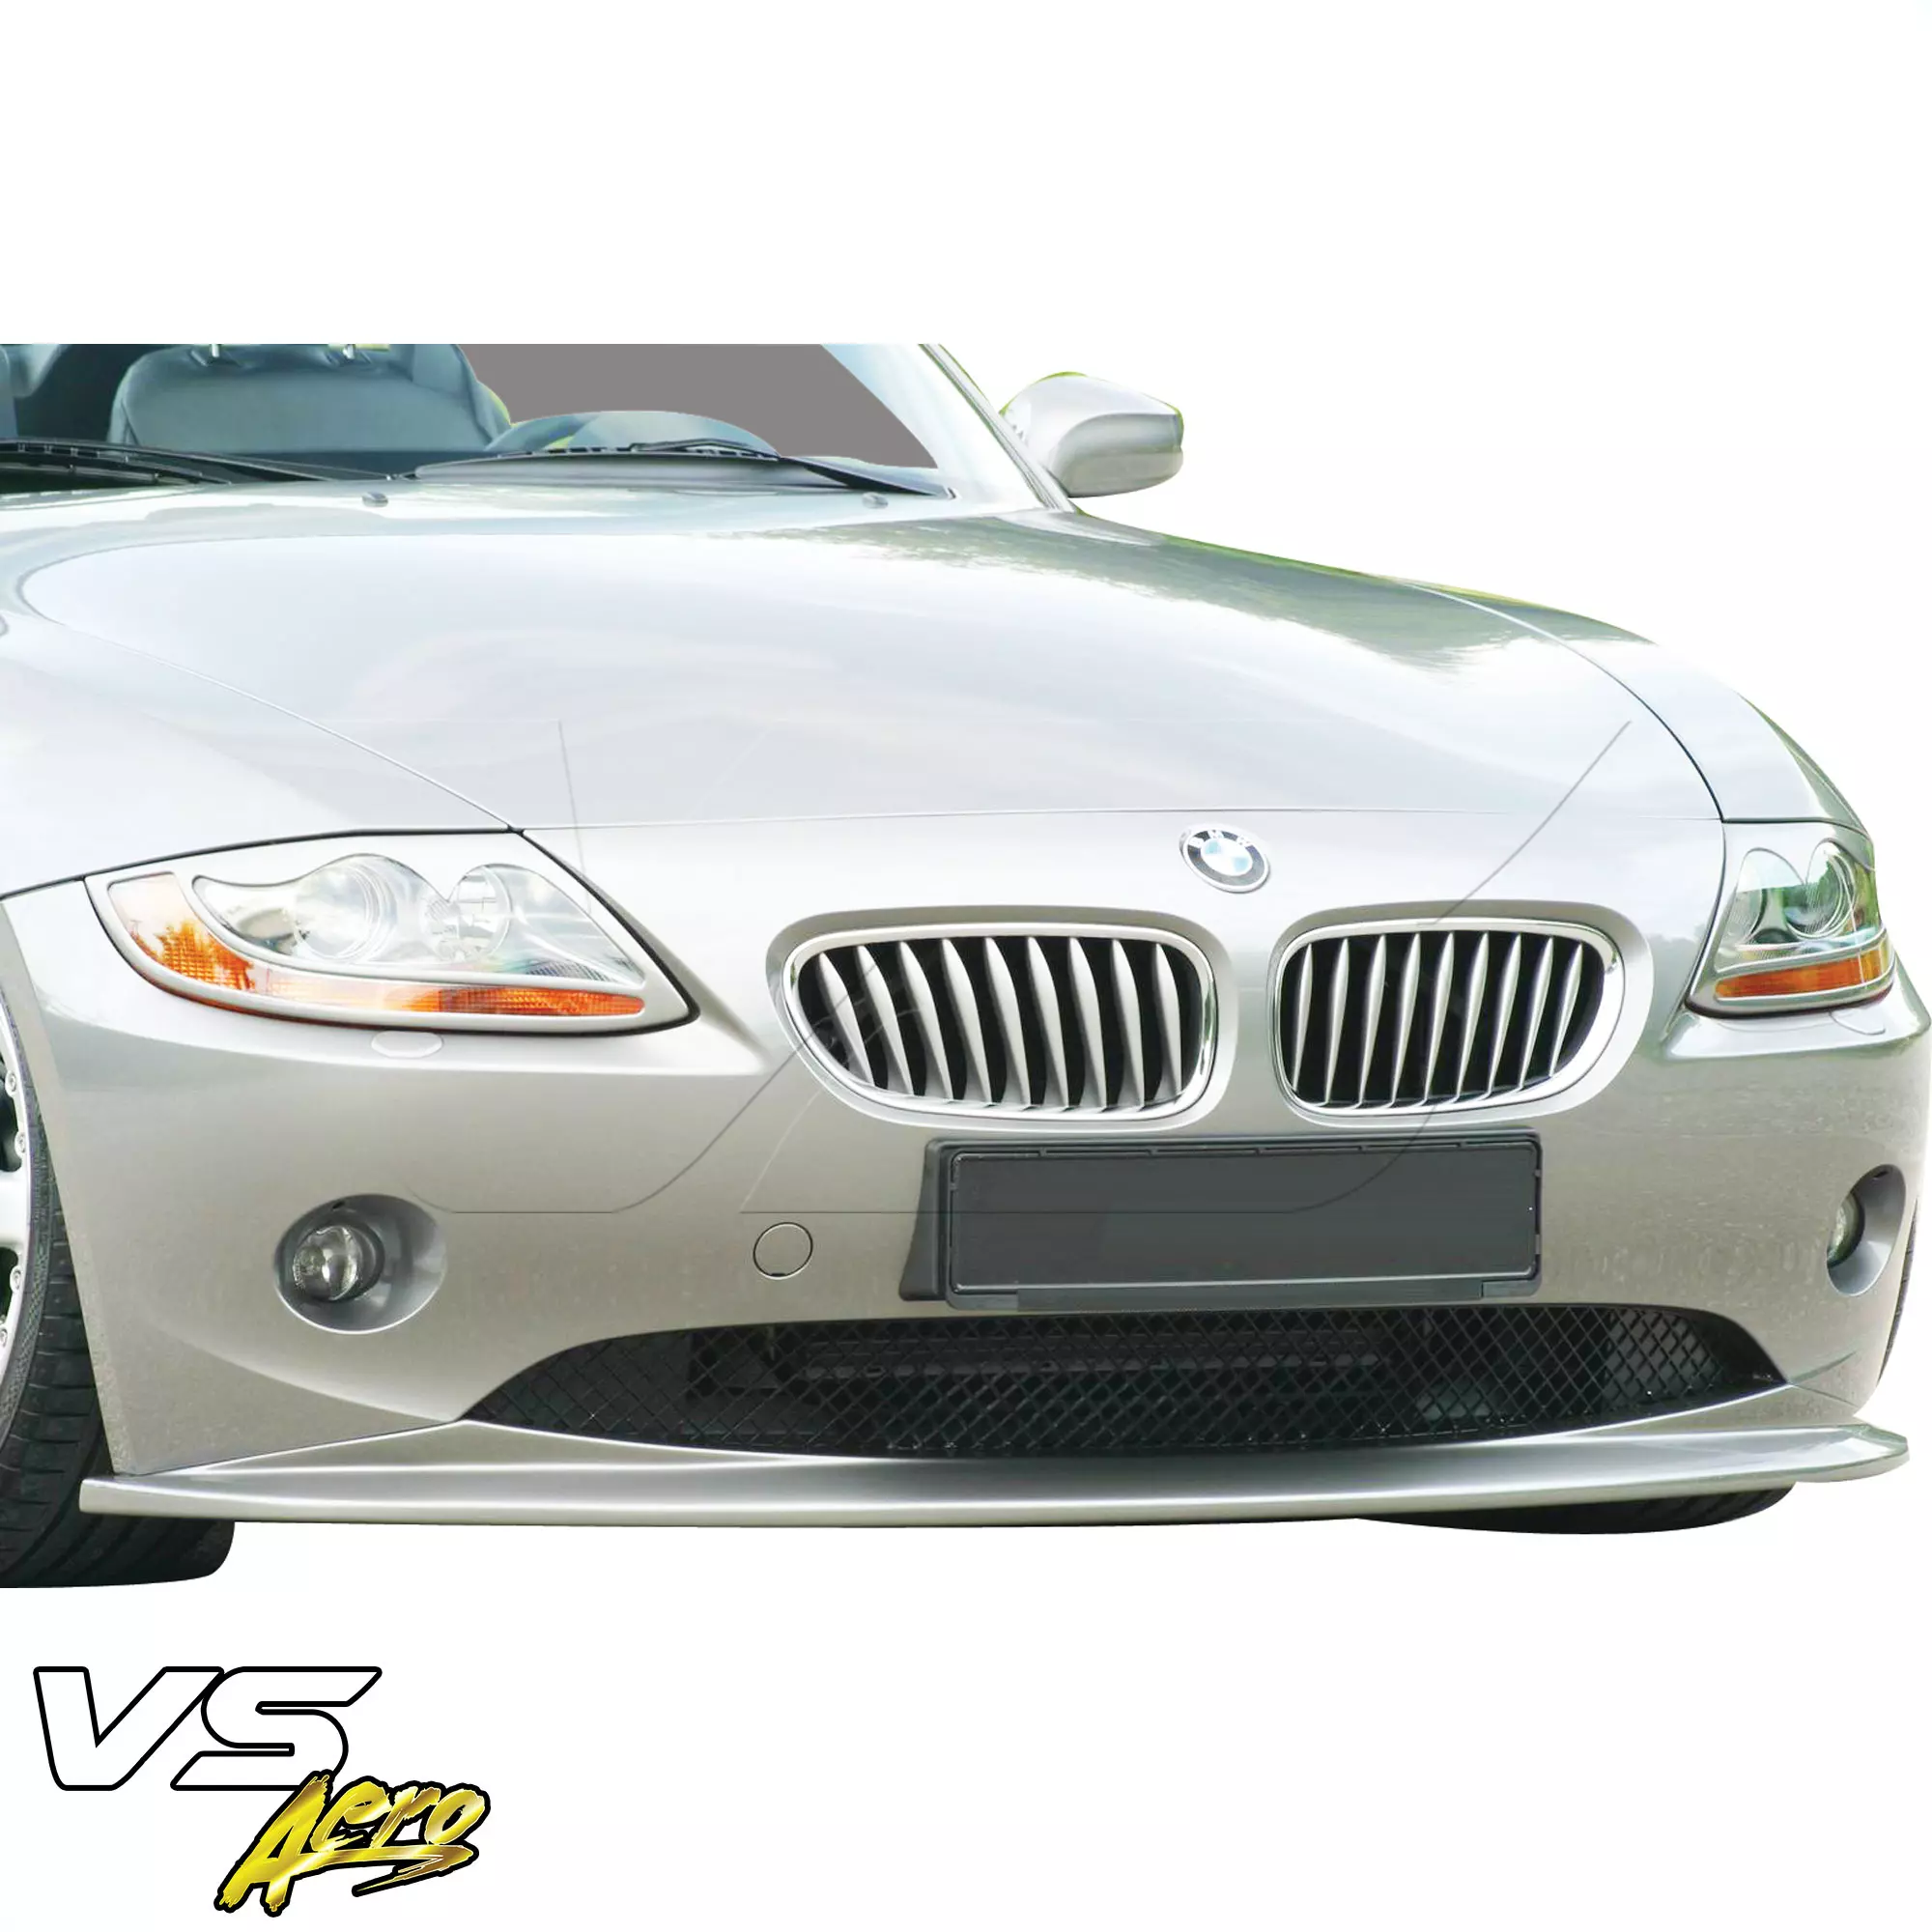 VSaero FRP HAMA Body Kit 4pc > BMW Z4 E85 2003-2005 - Image 8